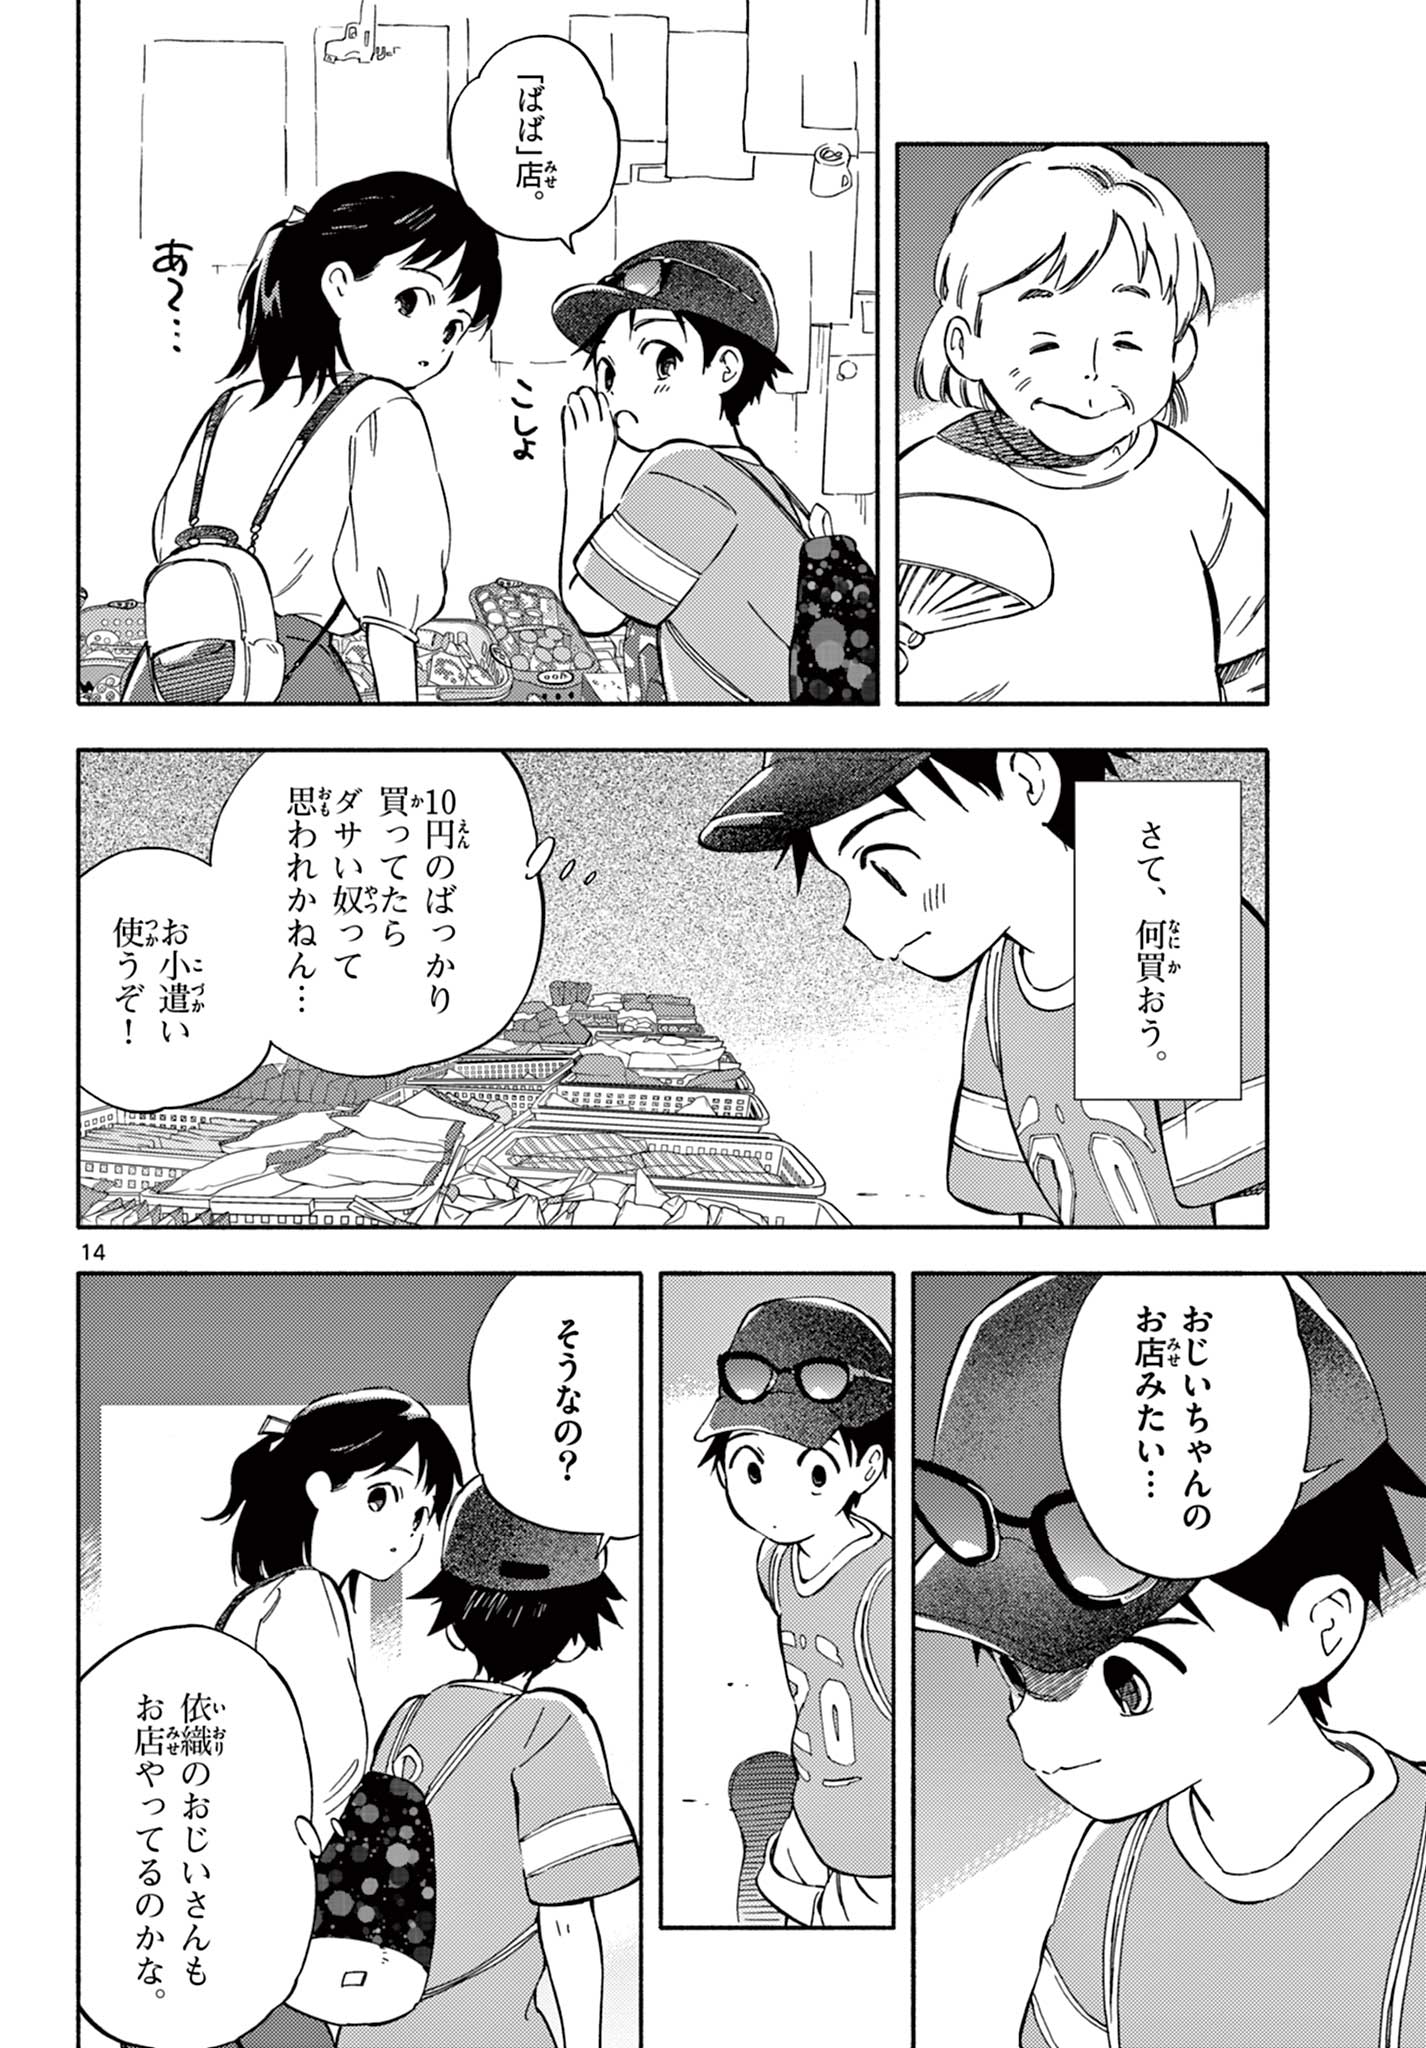 Nami no Shijima no Horizont - Chapter 9.2 - Page 2